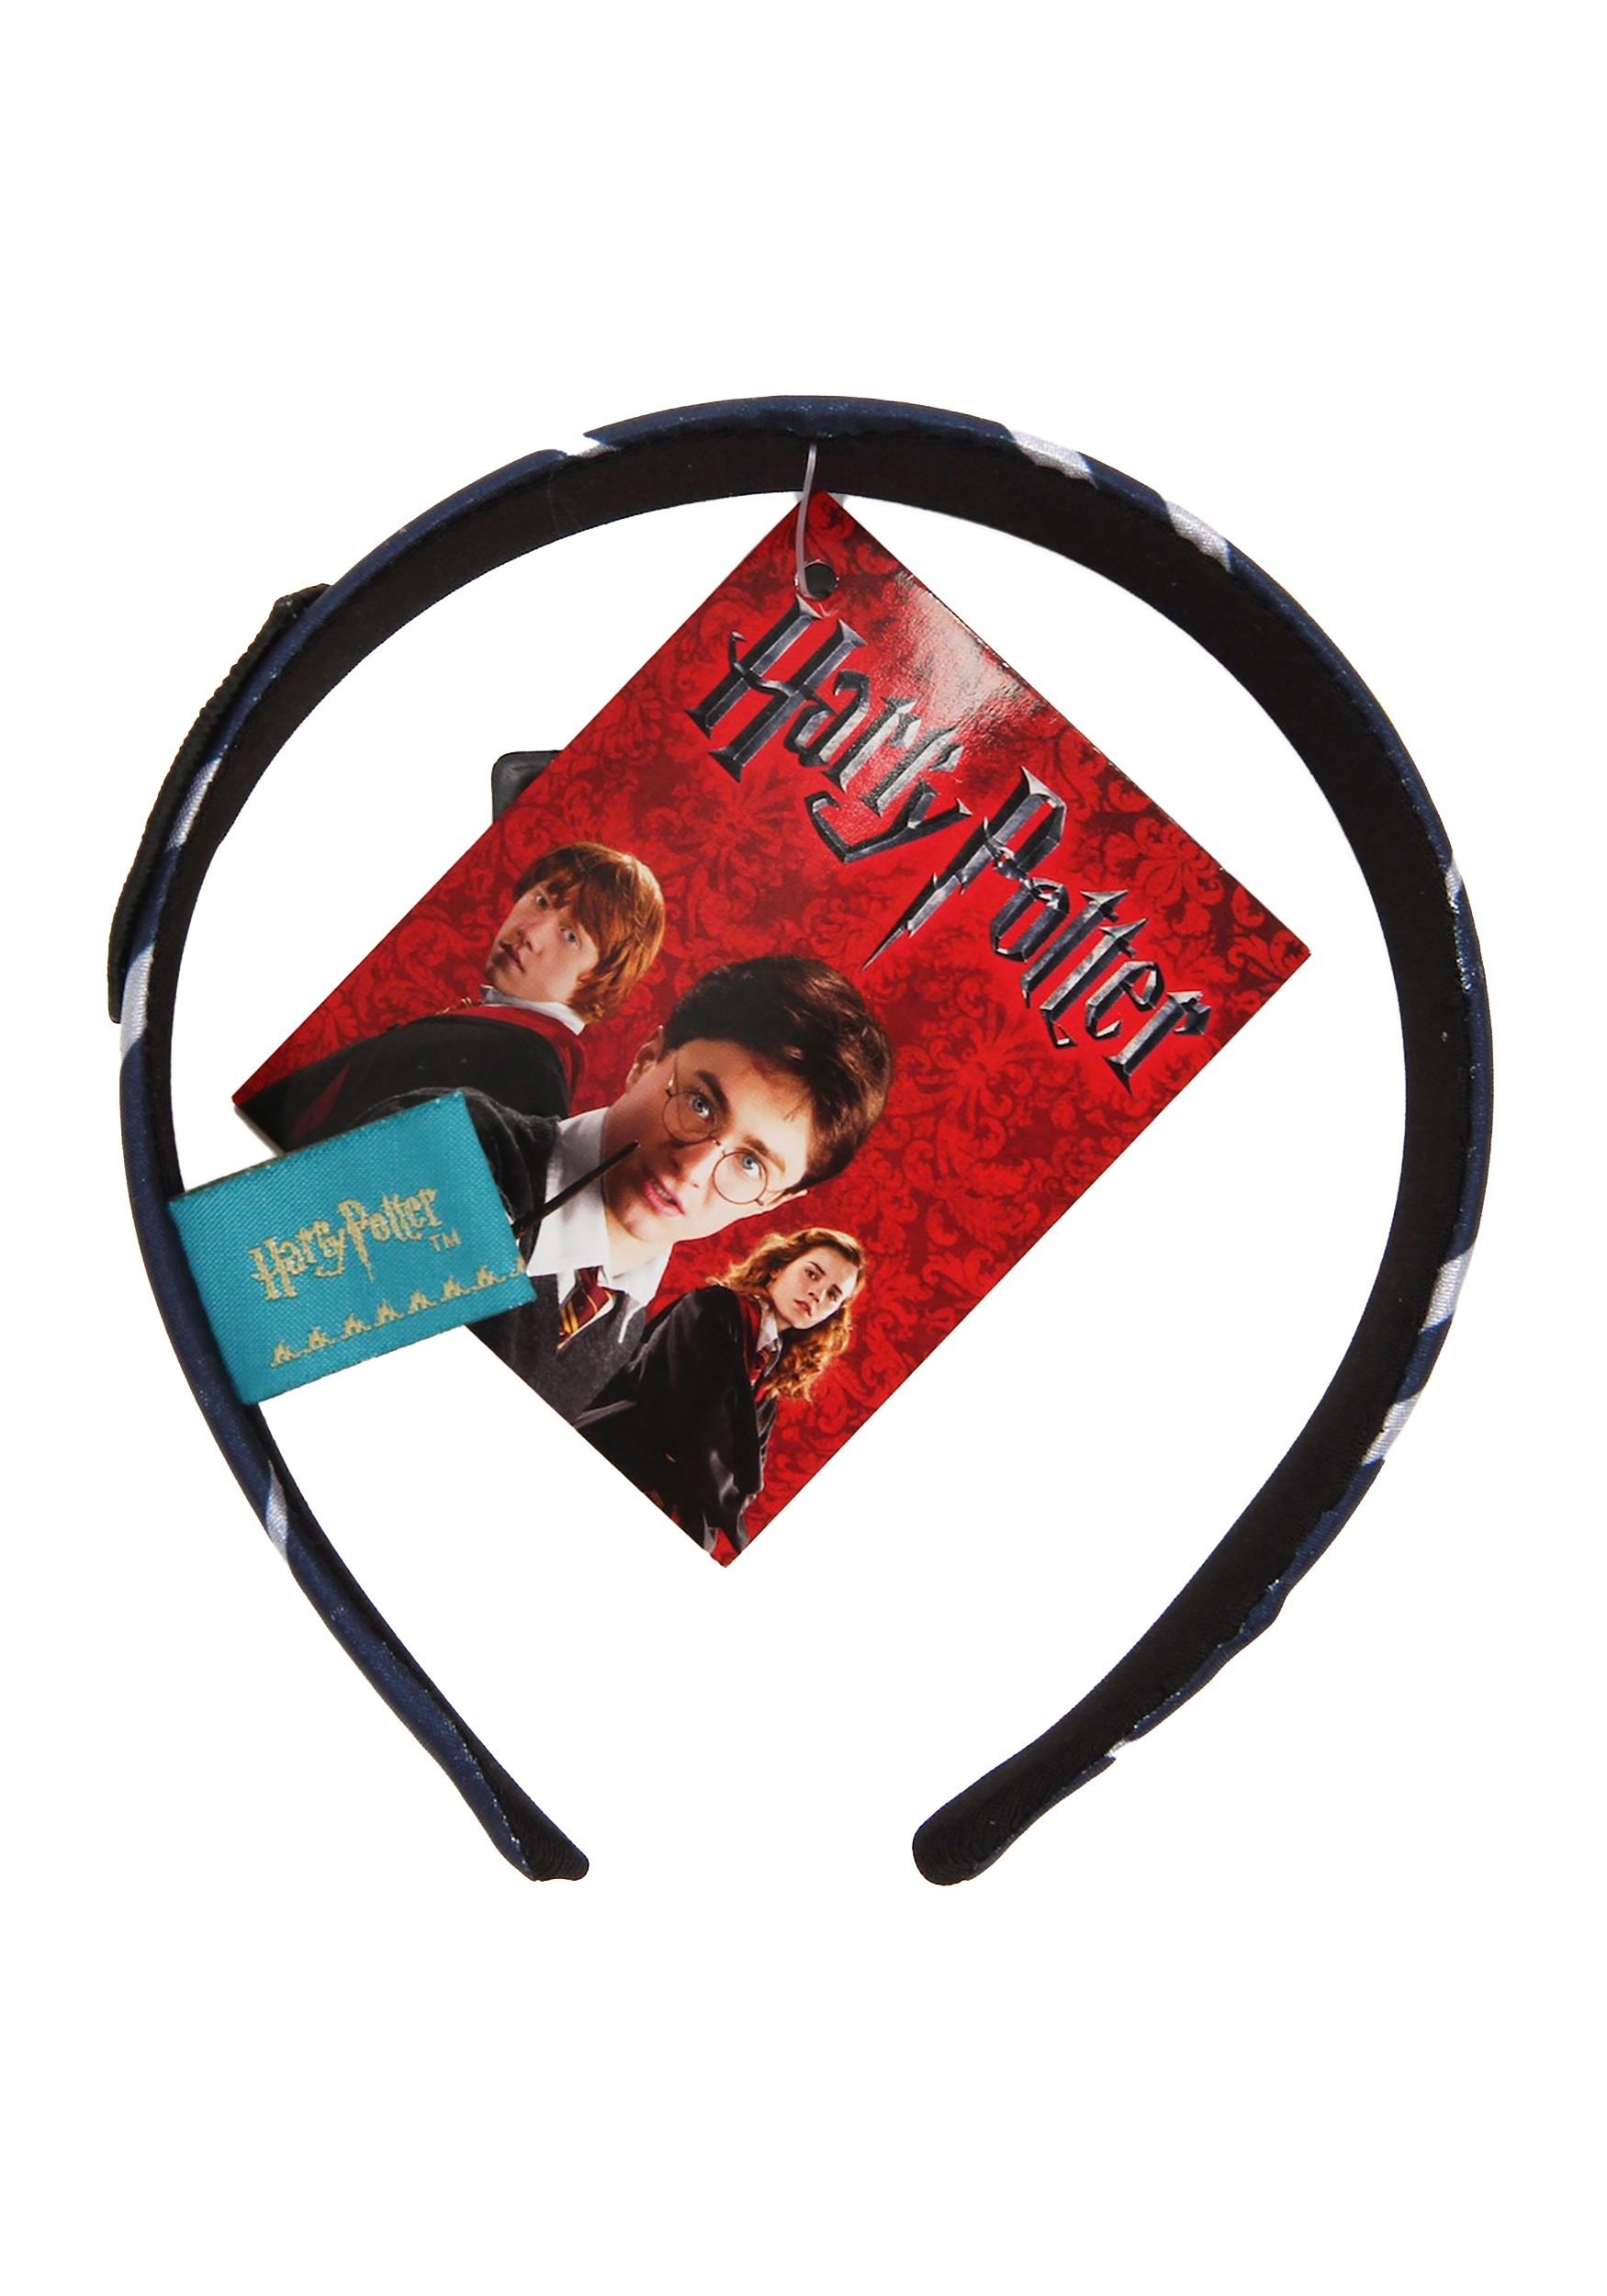 Harry Potter Ravenclaw Headband